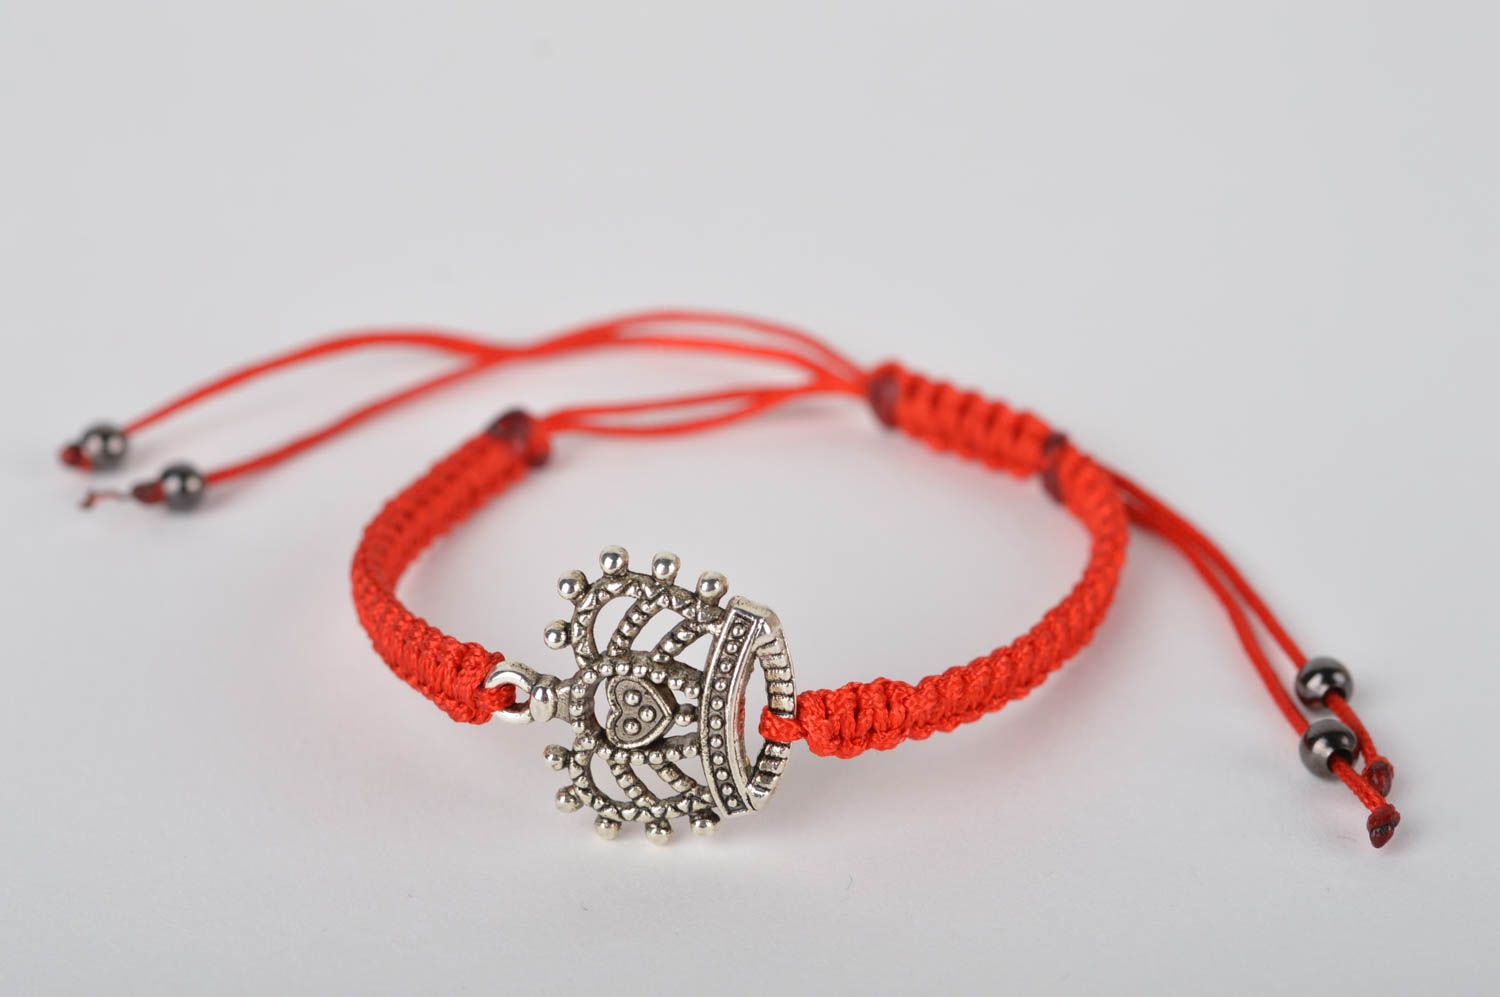 Beautiful handmade textile bracelet friendship bracelet designs gifts for her photo 2